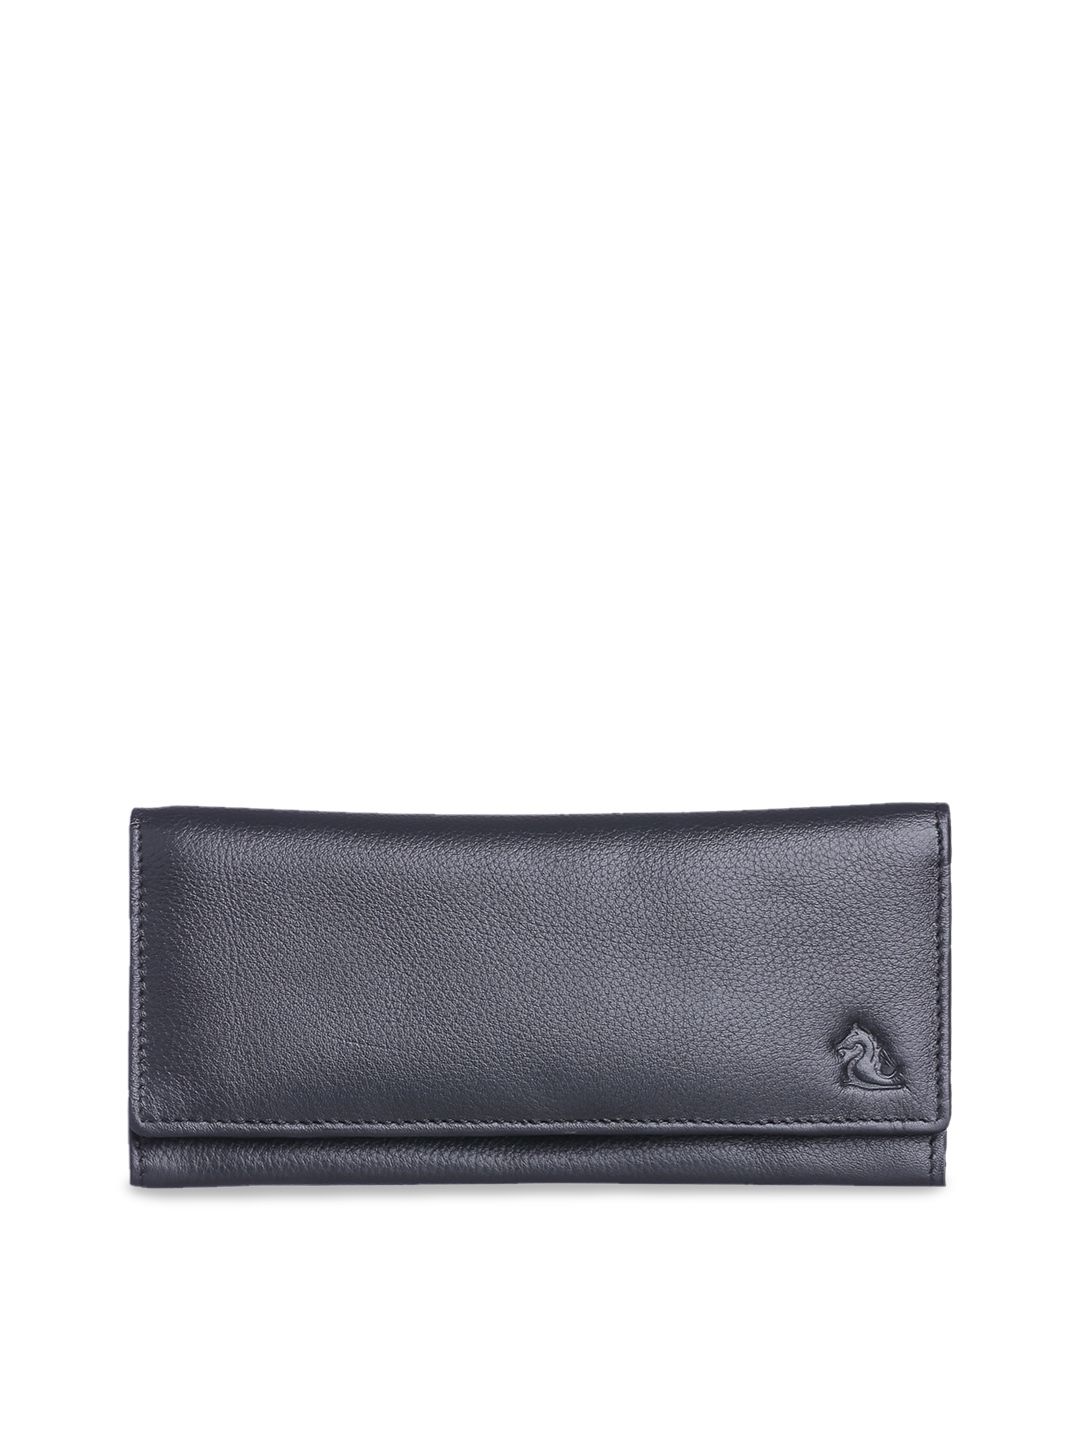 Kara Women Black Solid Leather Envelope Wallet Price in India